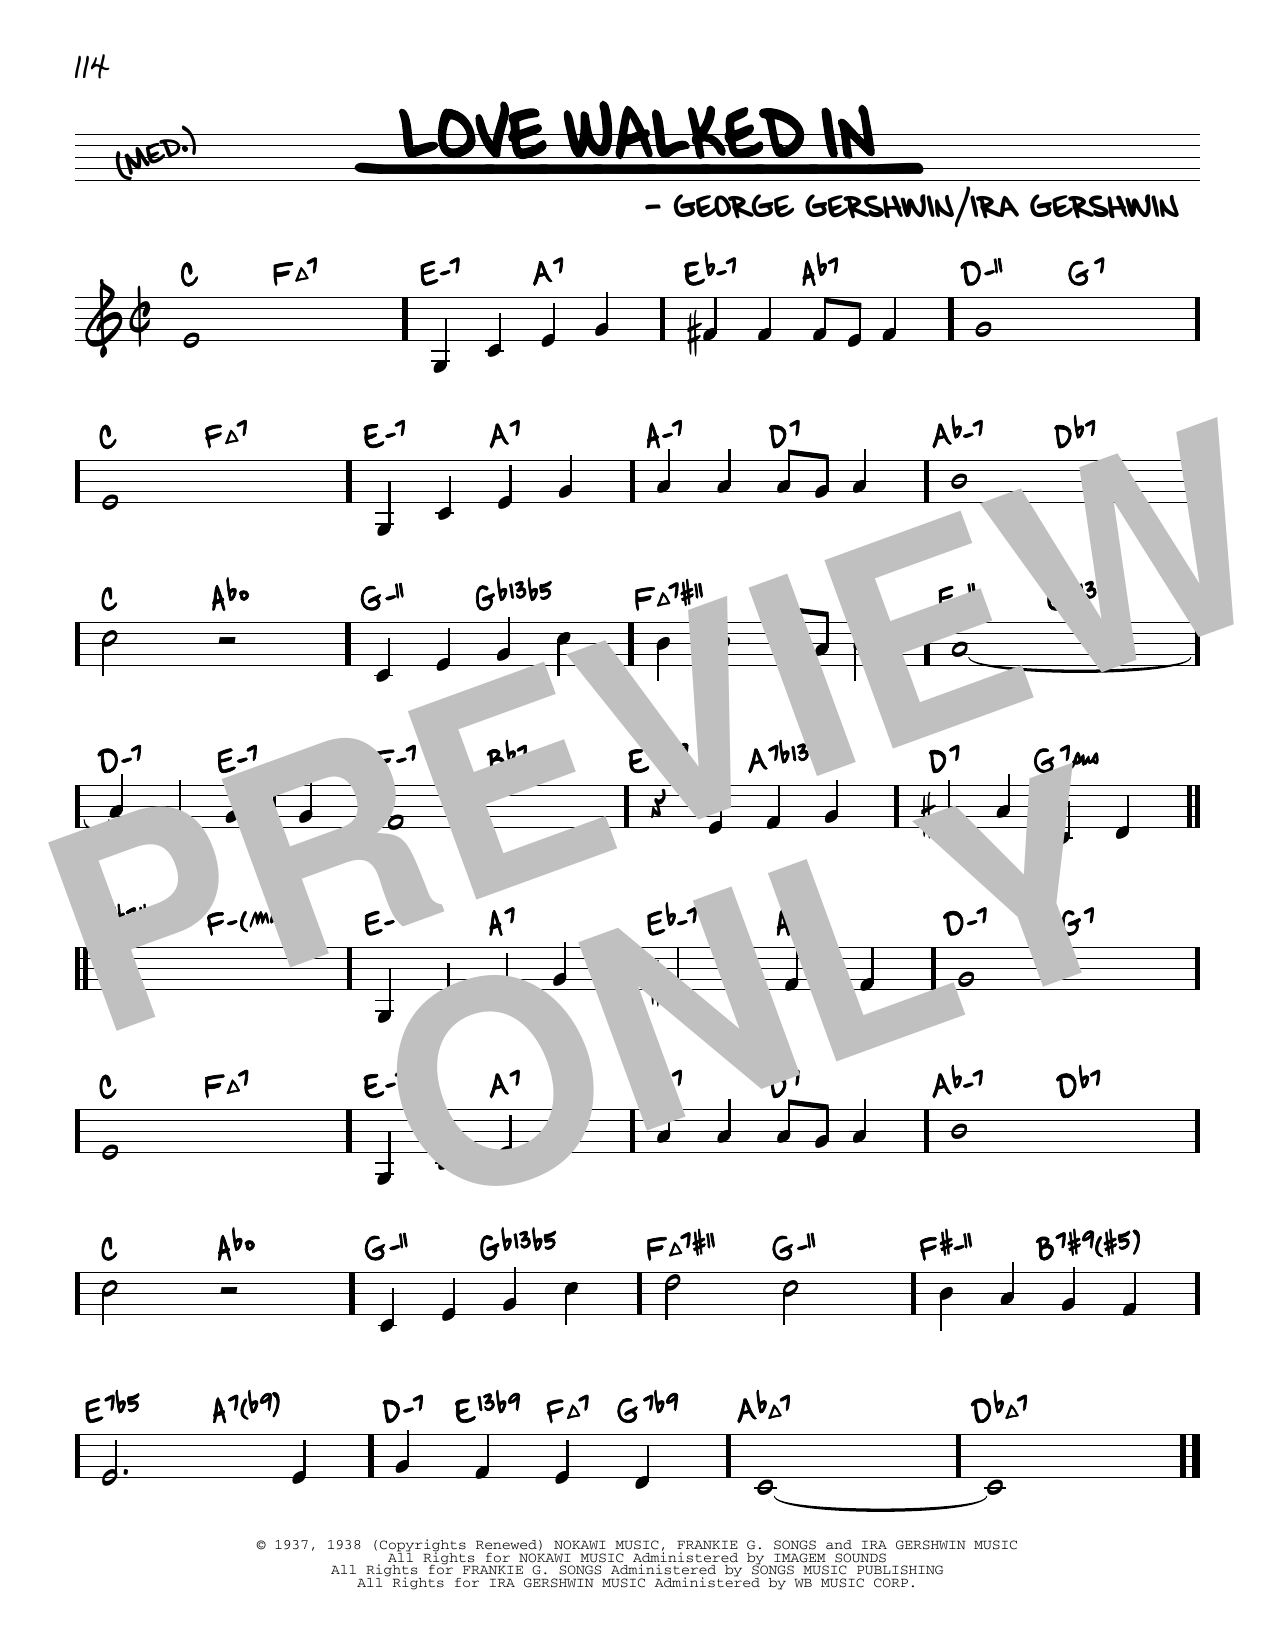 George Gershwin Love Walked In (arr. David Hazeltine) Sheet Music Notes & Chords for Real Book – Enhanced Chords - Download or Print PDF